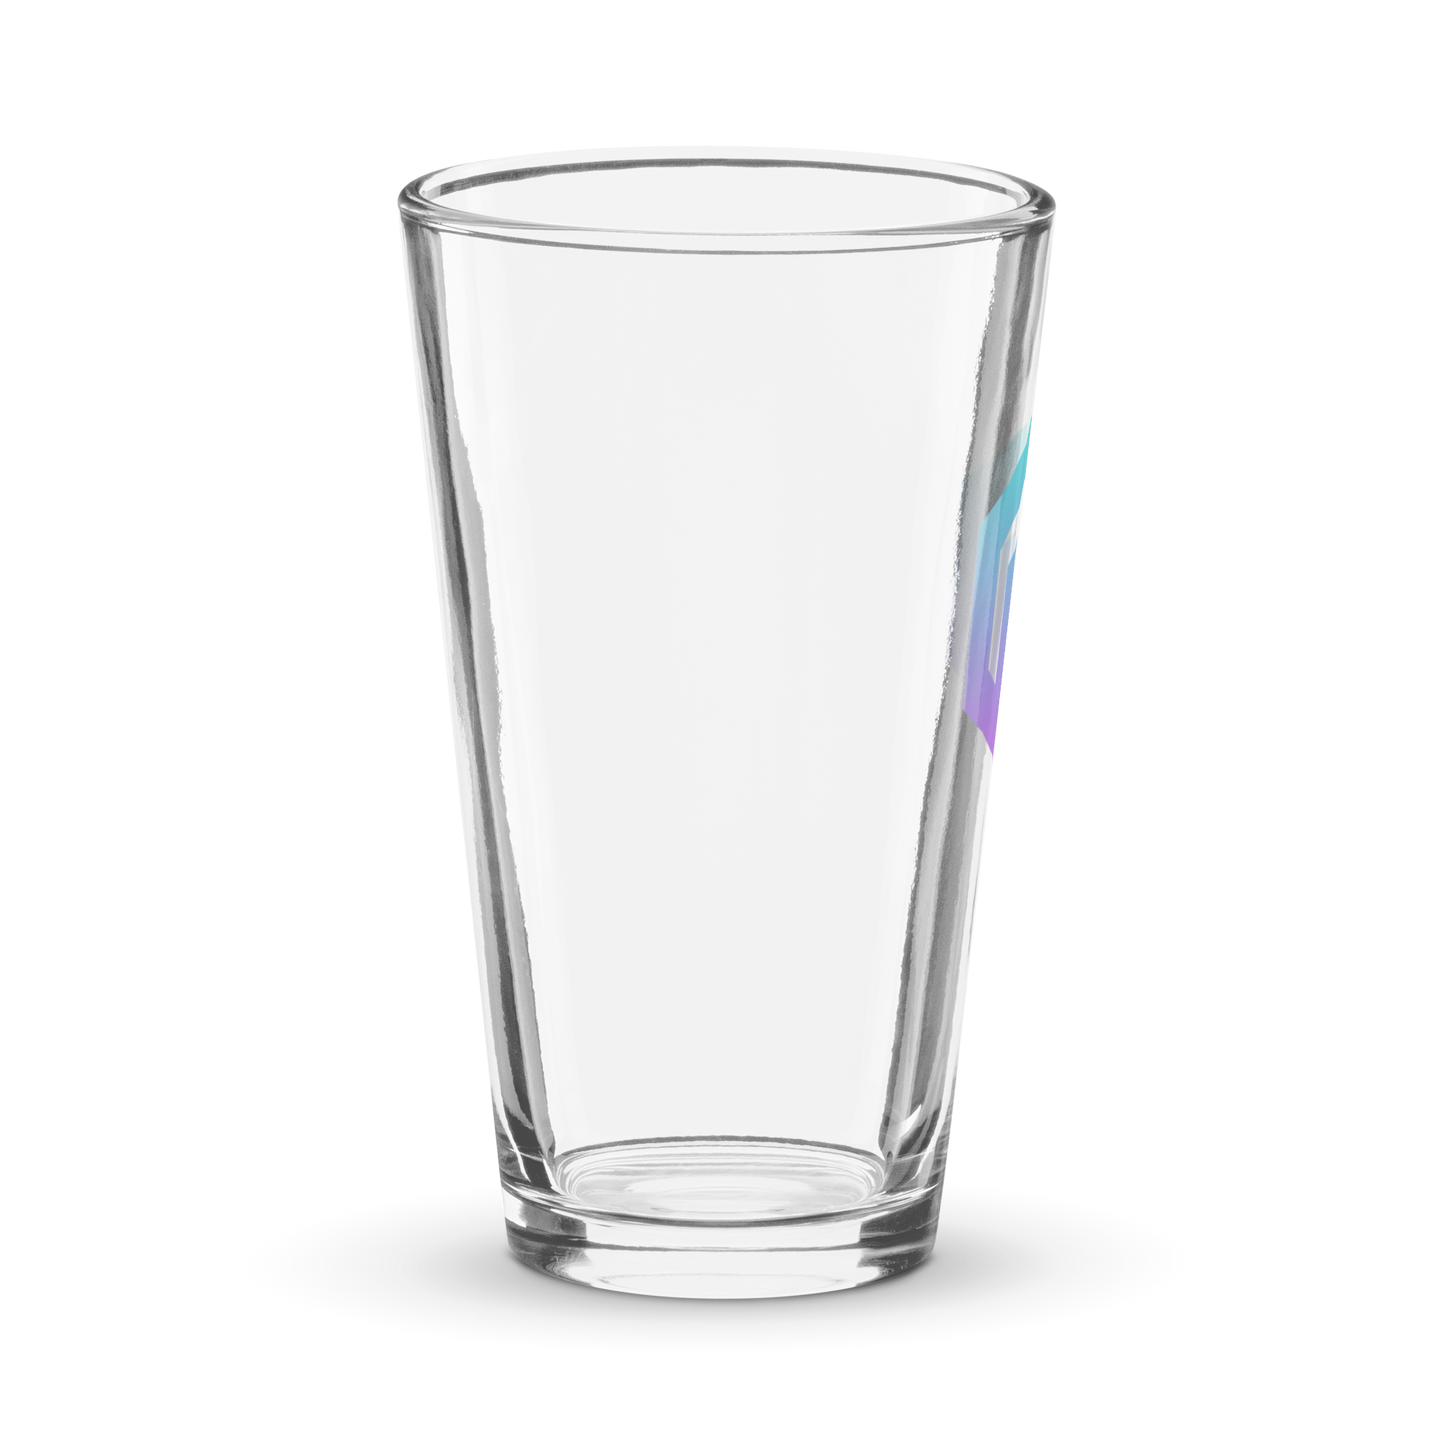 MetaLabz Pint Glass